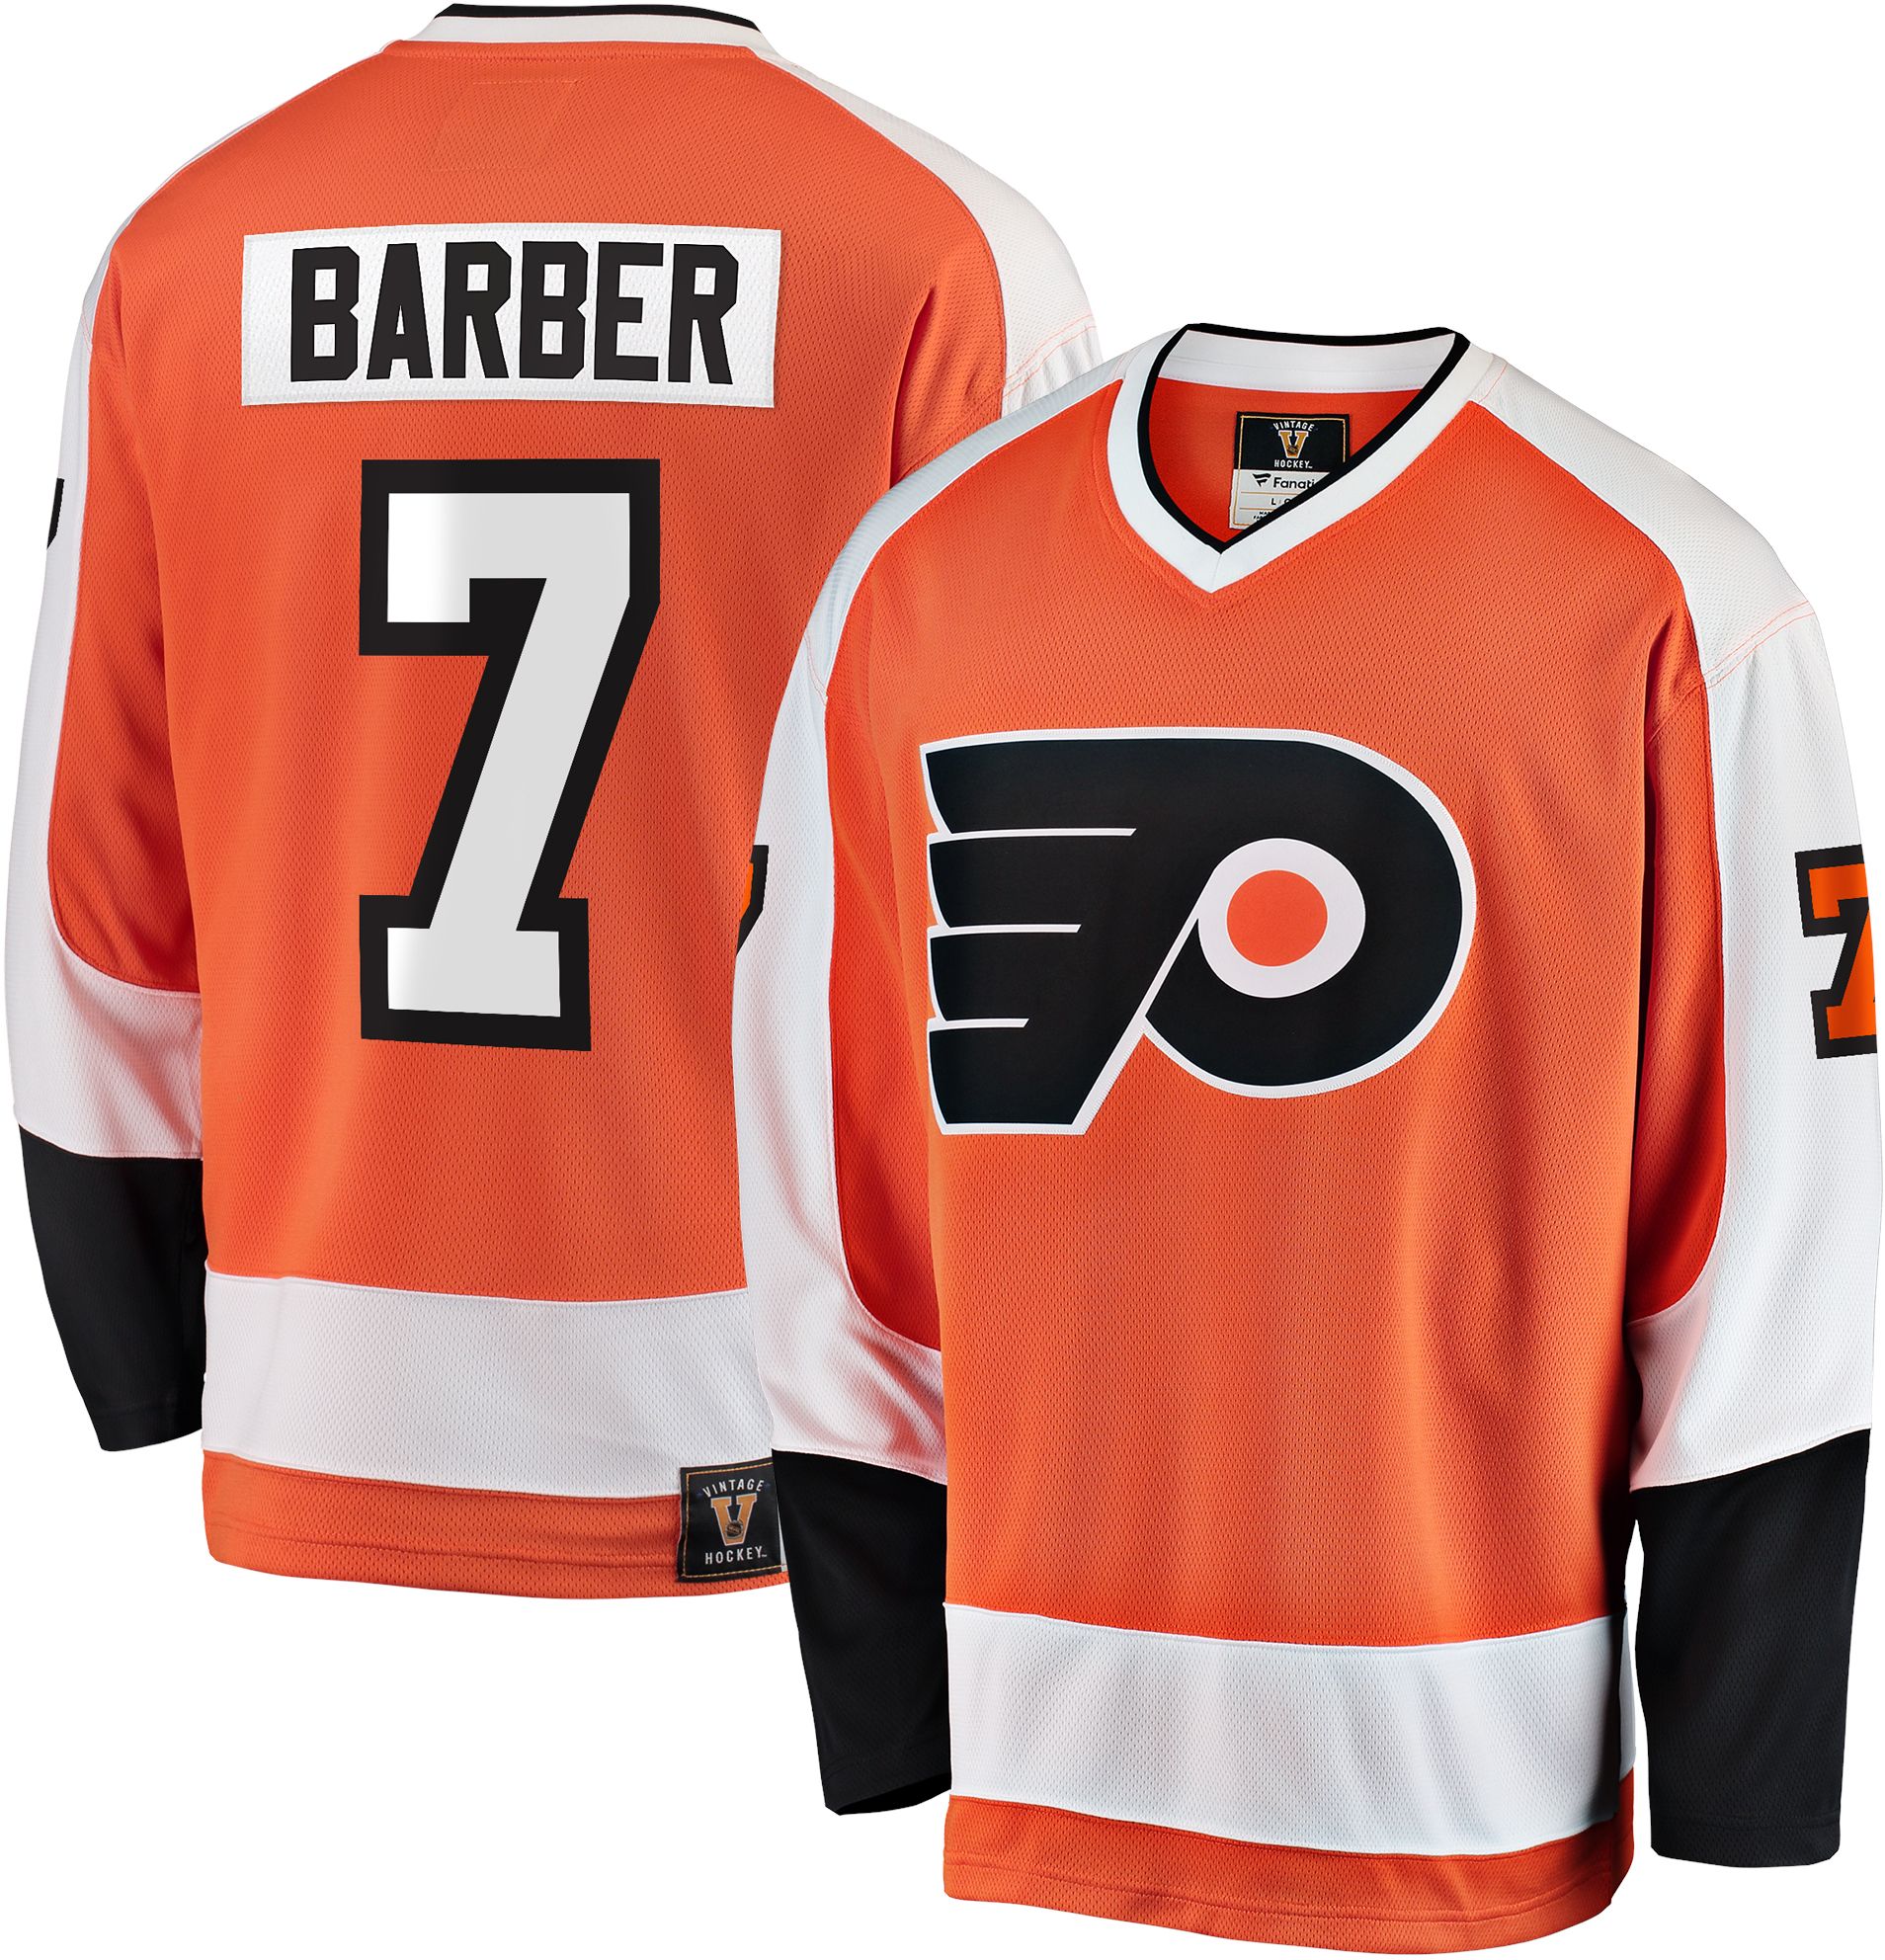 Philadelphia Flyers No7 Bill Barber Orange Home Womens Jersey